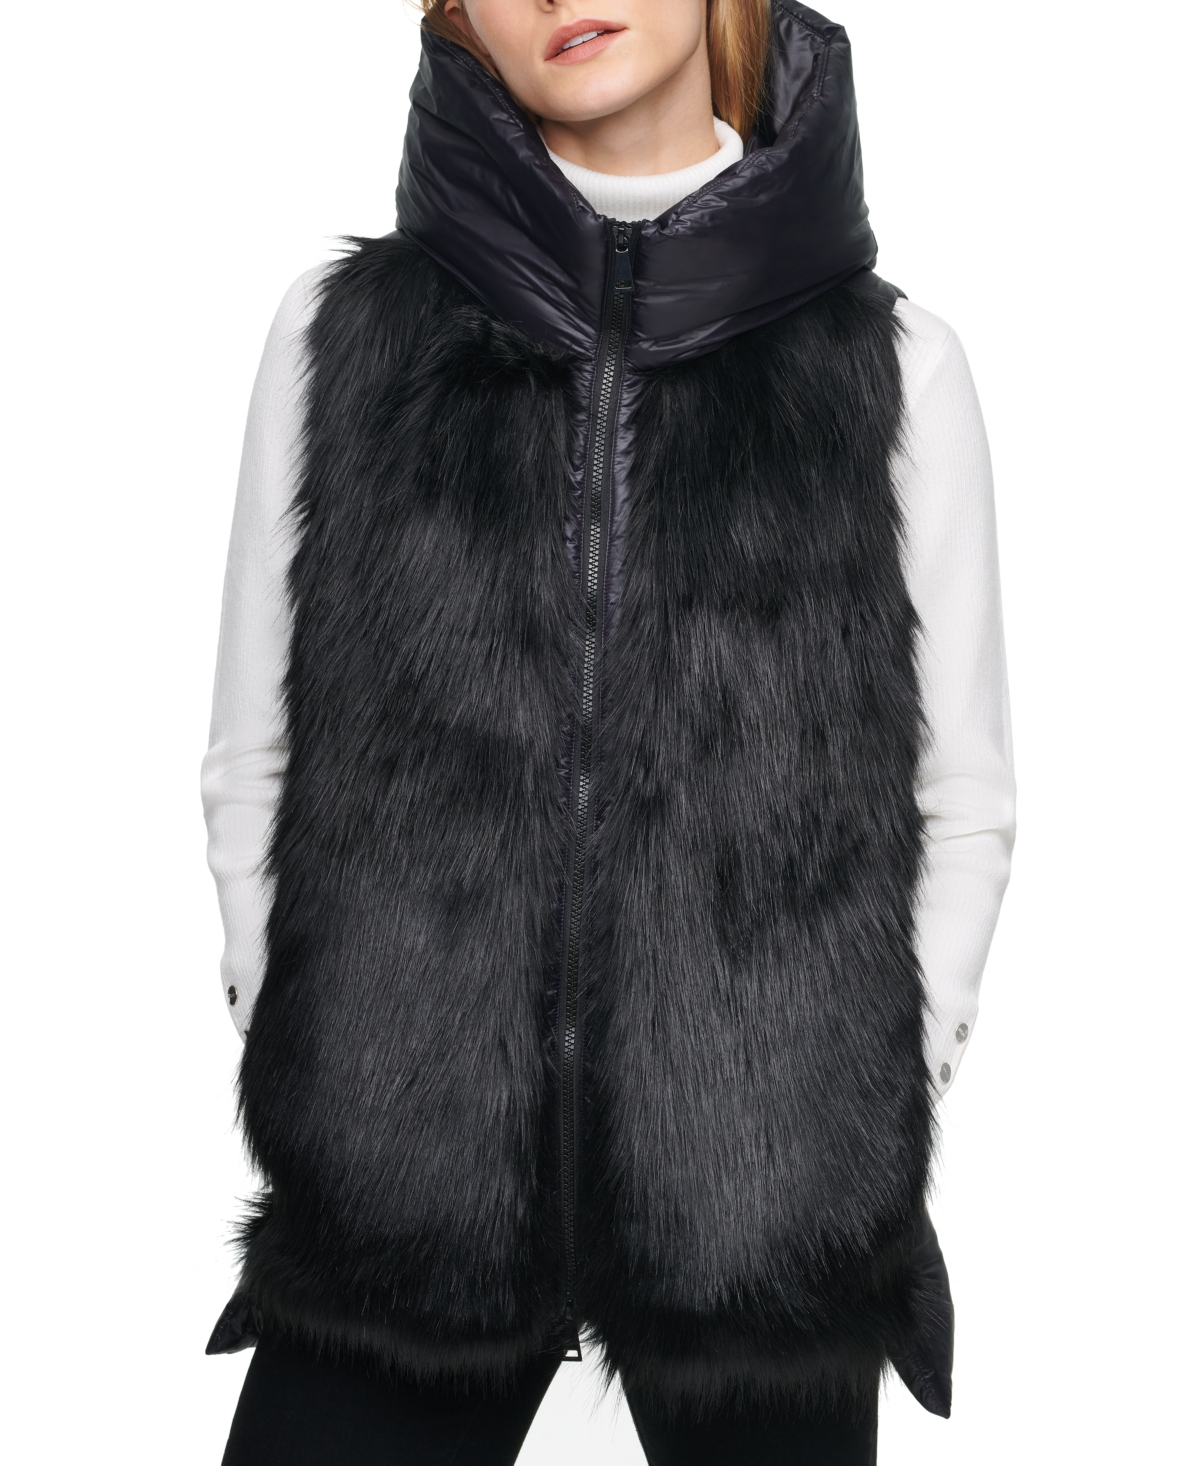 Dkny Women's Faux Leather Long Puffer Jacket in Black Size 2XS 100% Polyester/100% Nylon